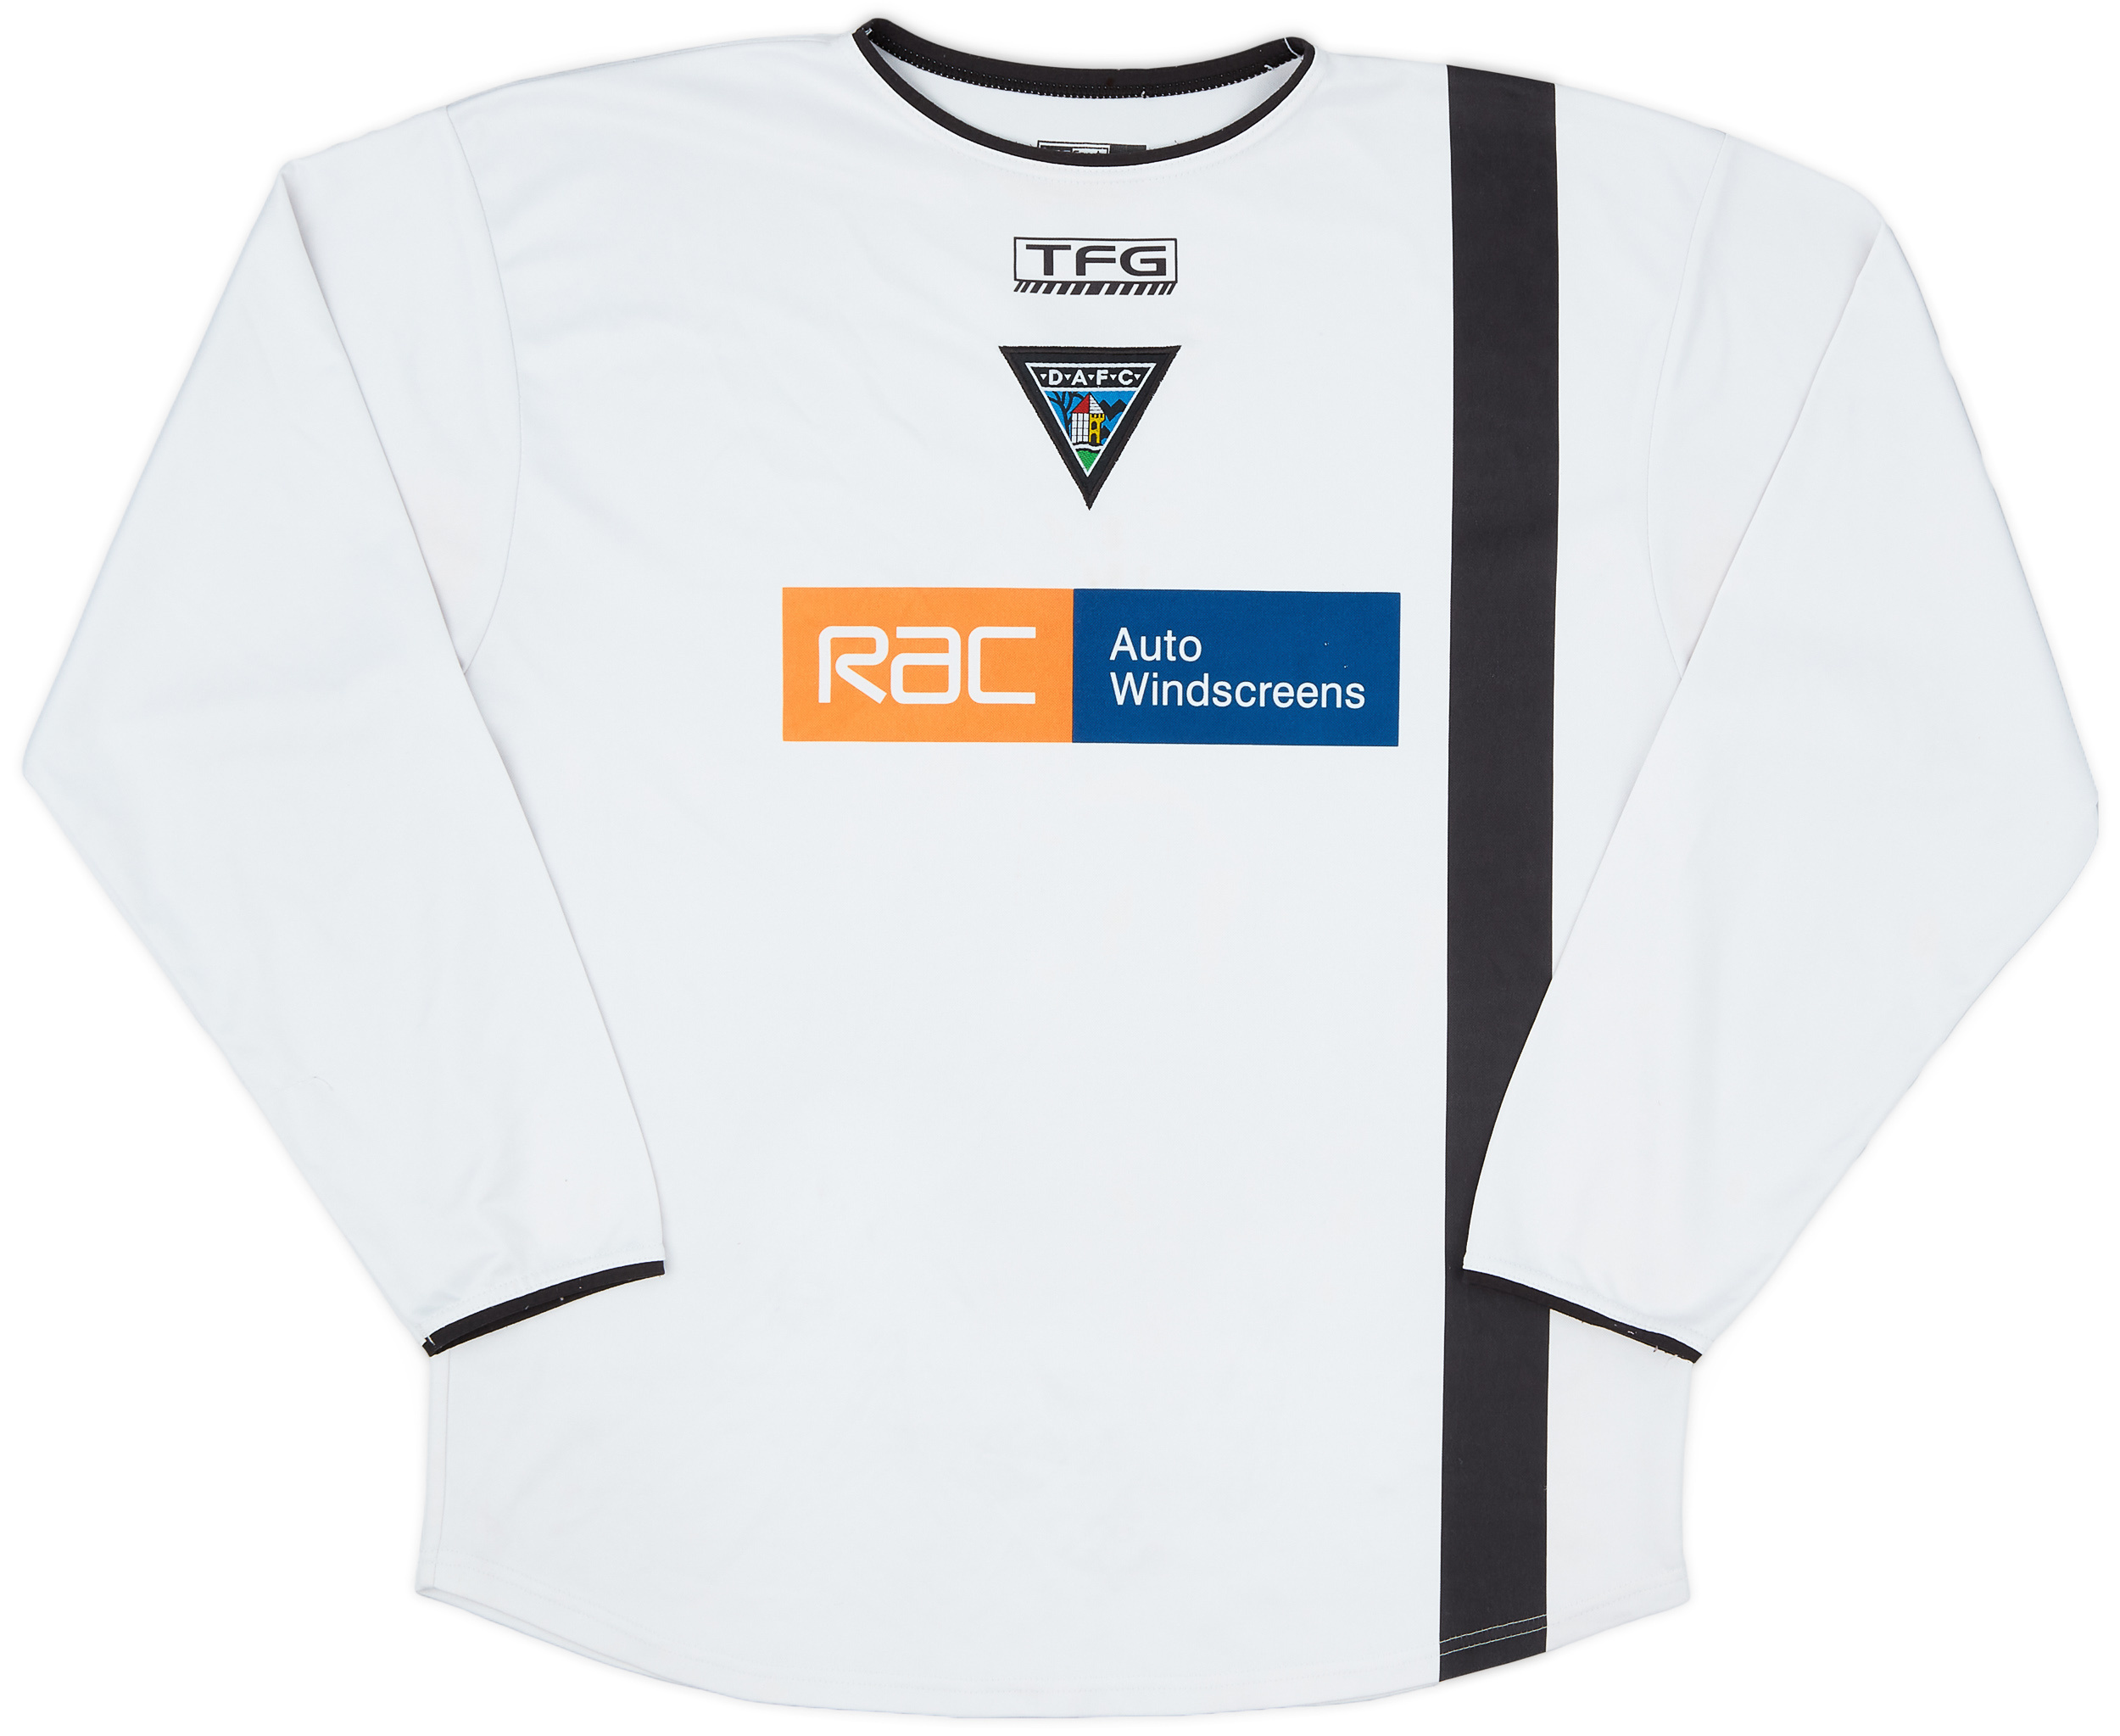 Retro Dunfermline Athletic Shirt